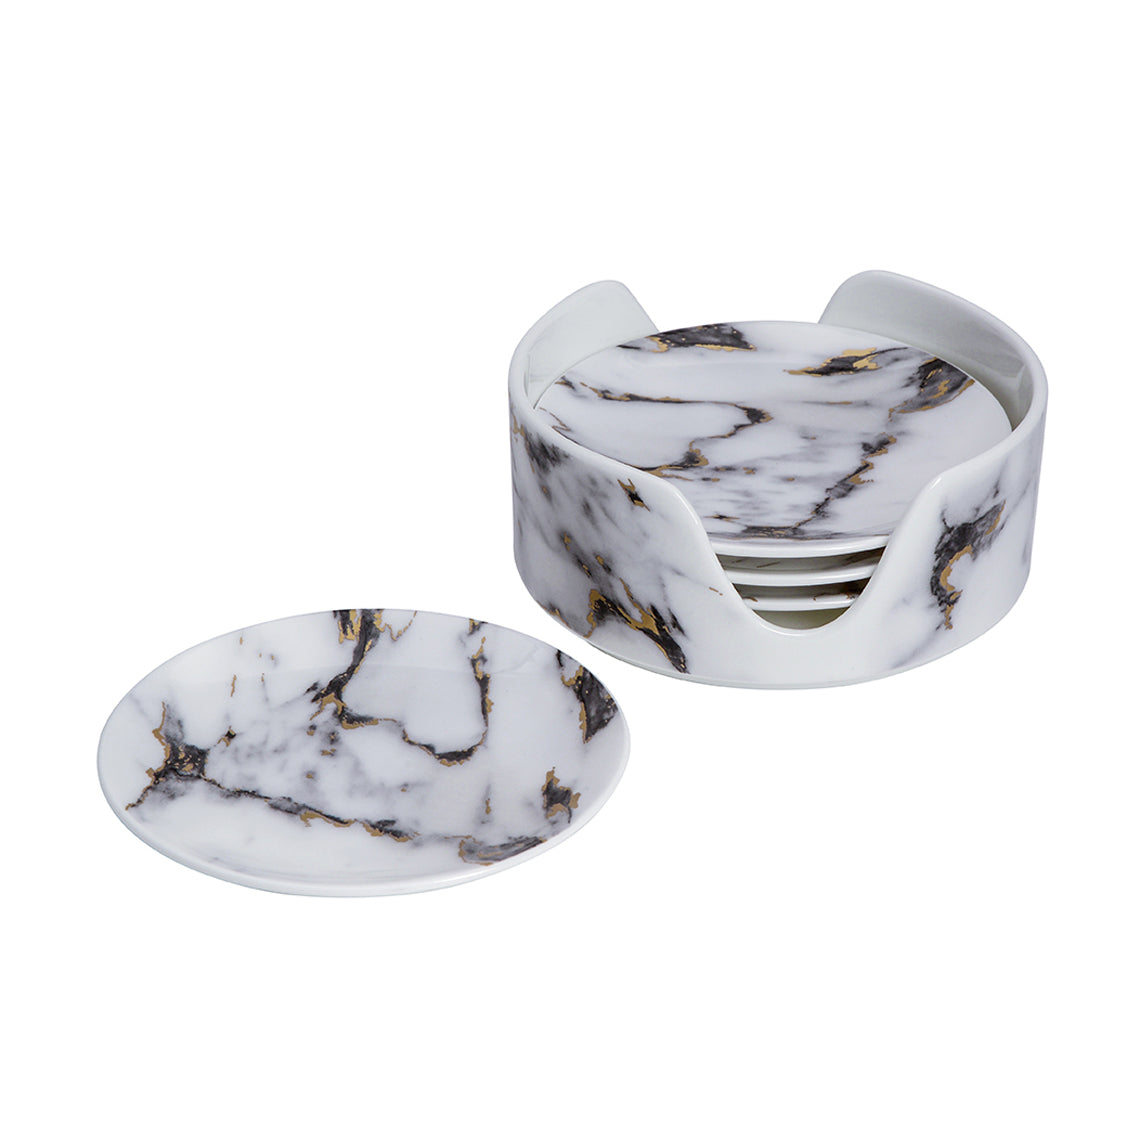 Prouna Marble Venice Fog Set of 4 Coasters in Holder White Background Photo